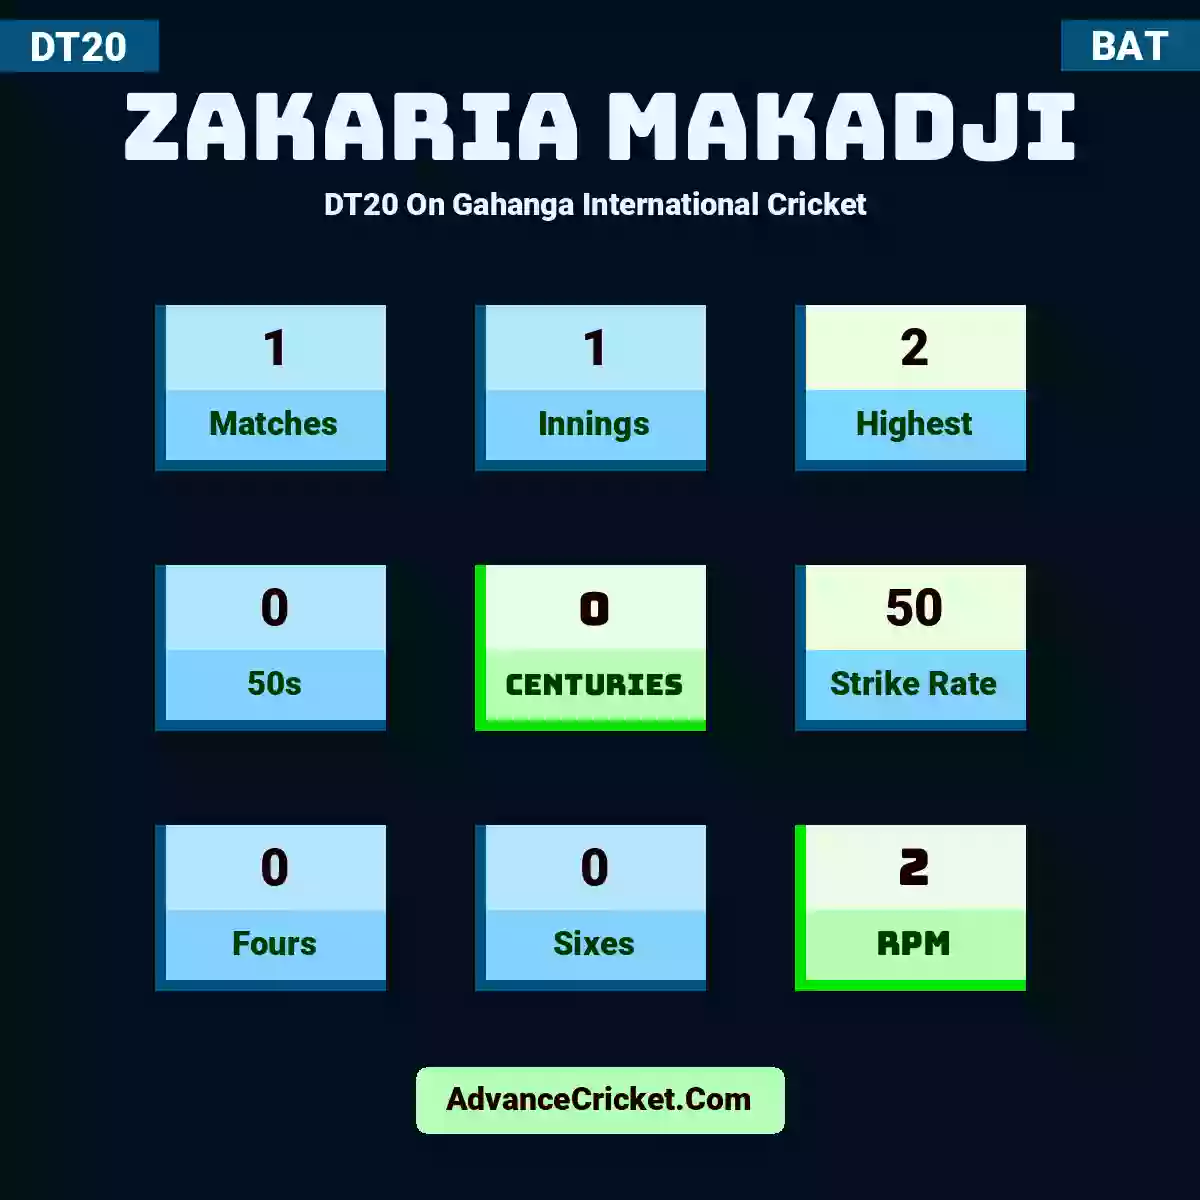 Zakaria Makadji DT20  On Gahanga International Cricket , Zakaria Makadji played 1 matches, scored 2 runs as highest, 0 half-centuries, and 0 centuries, with a strike rate of 50. Z.Makadji hit 0 fours and 0 sixes, with an RPM of 2.